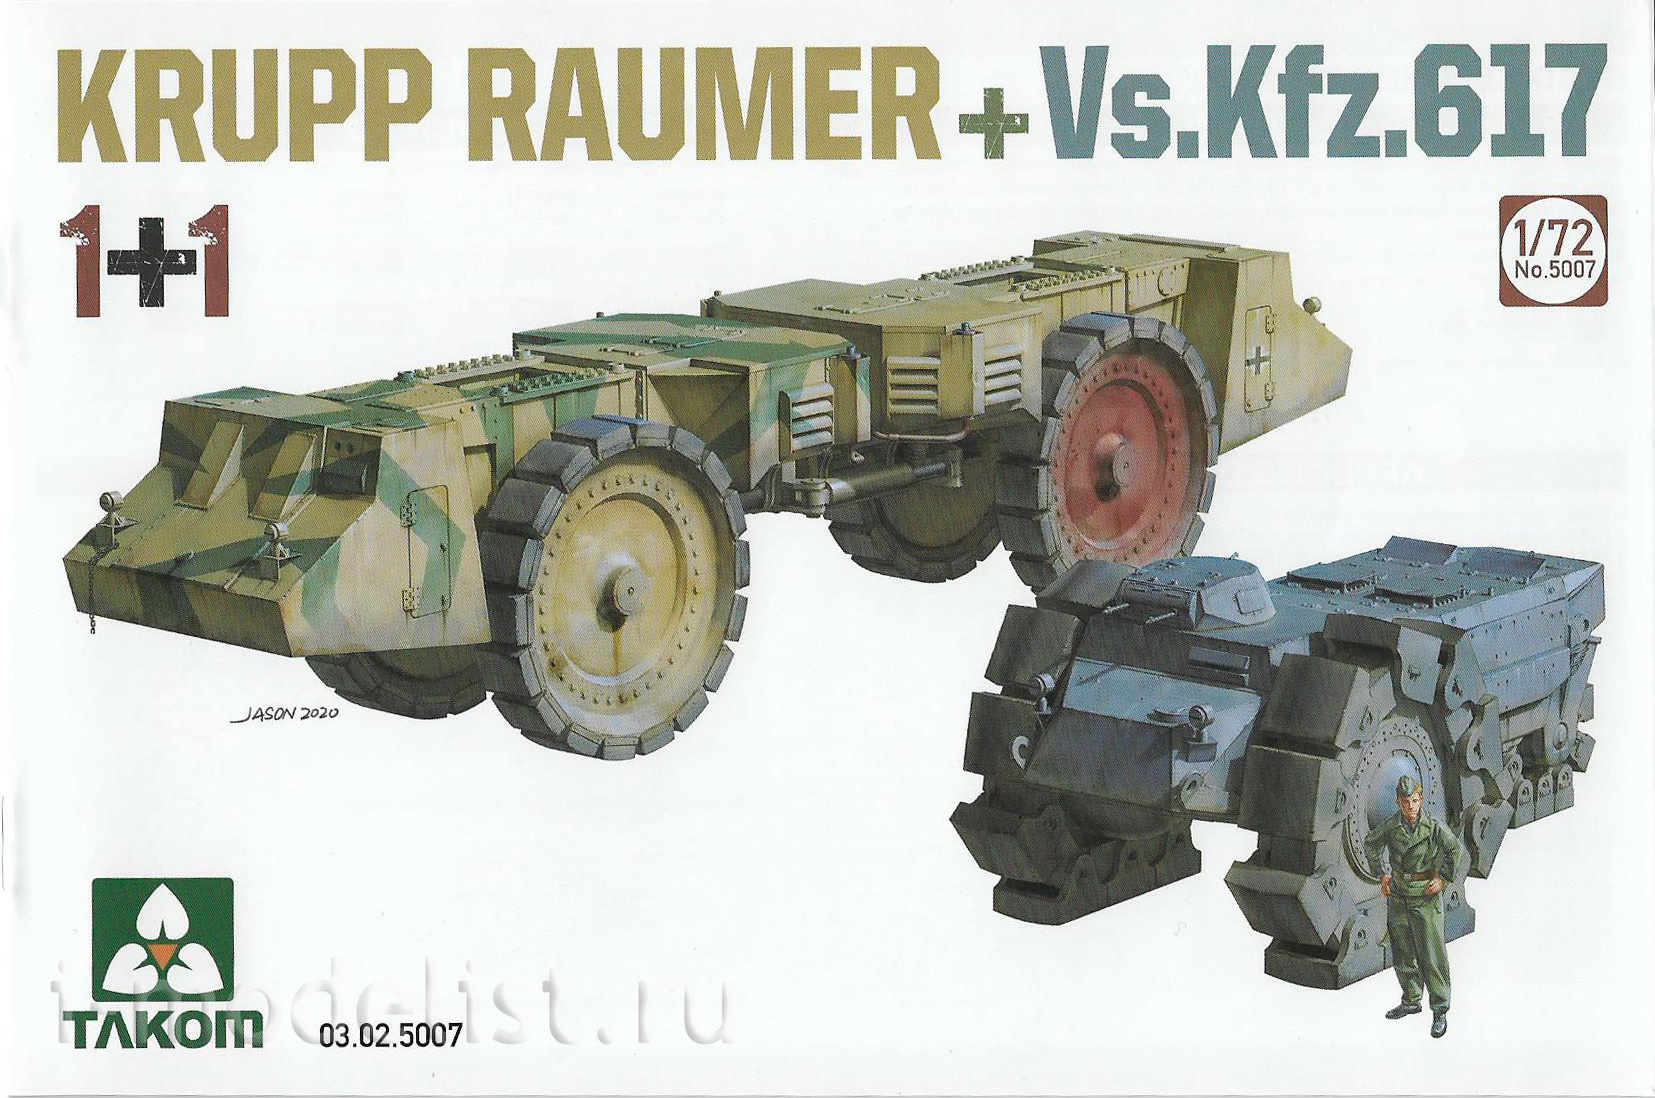 5007 Takom 1/72 Машины разминирования Krupp Raumer и Vs.Kfz. 617